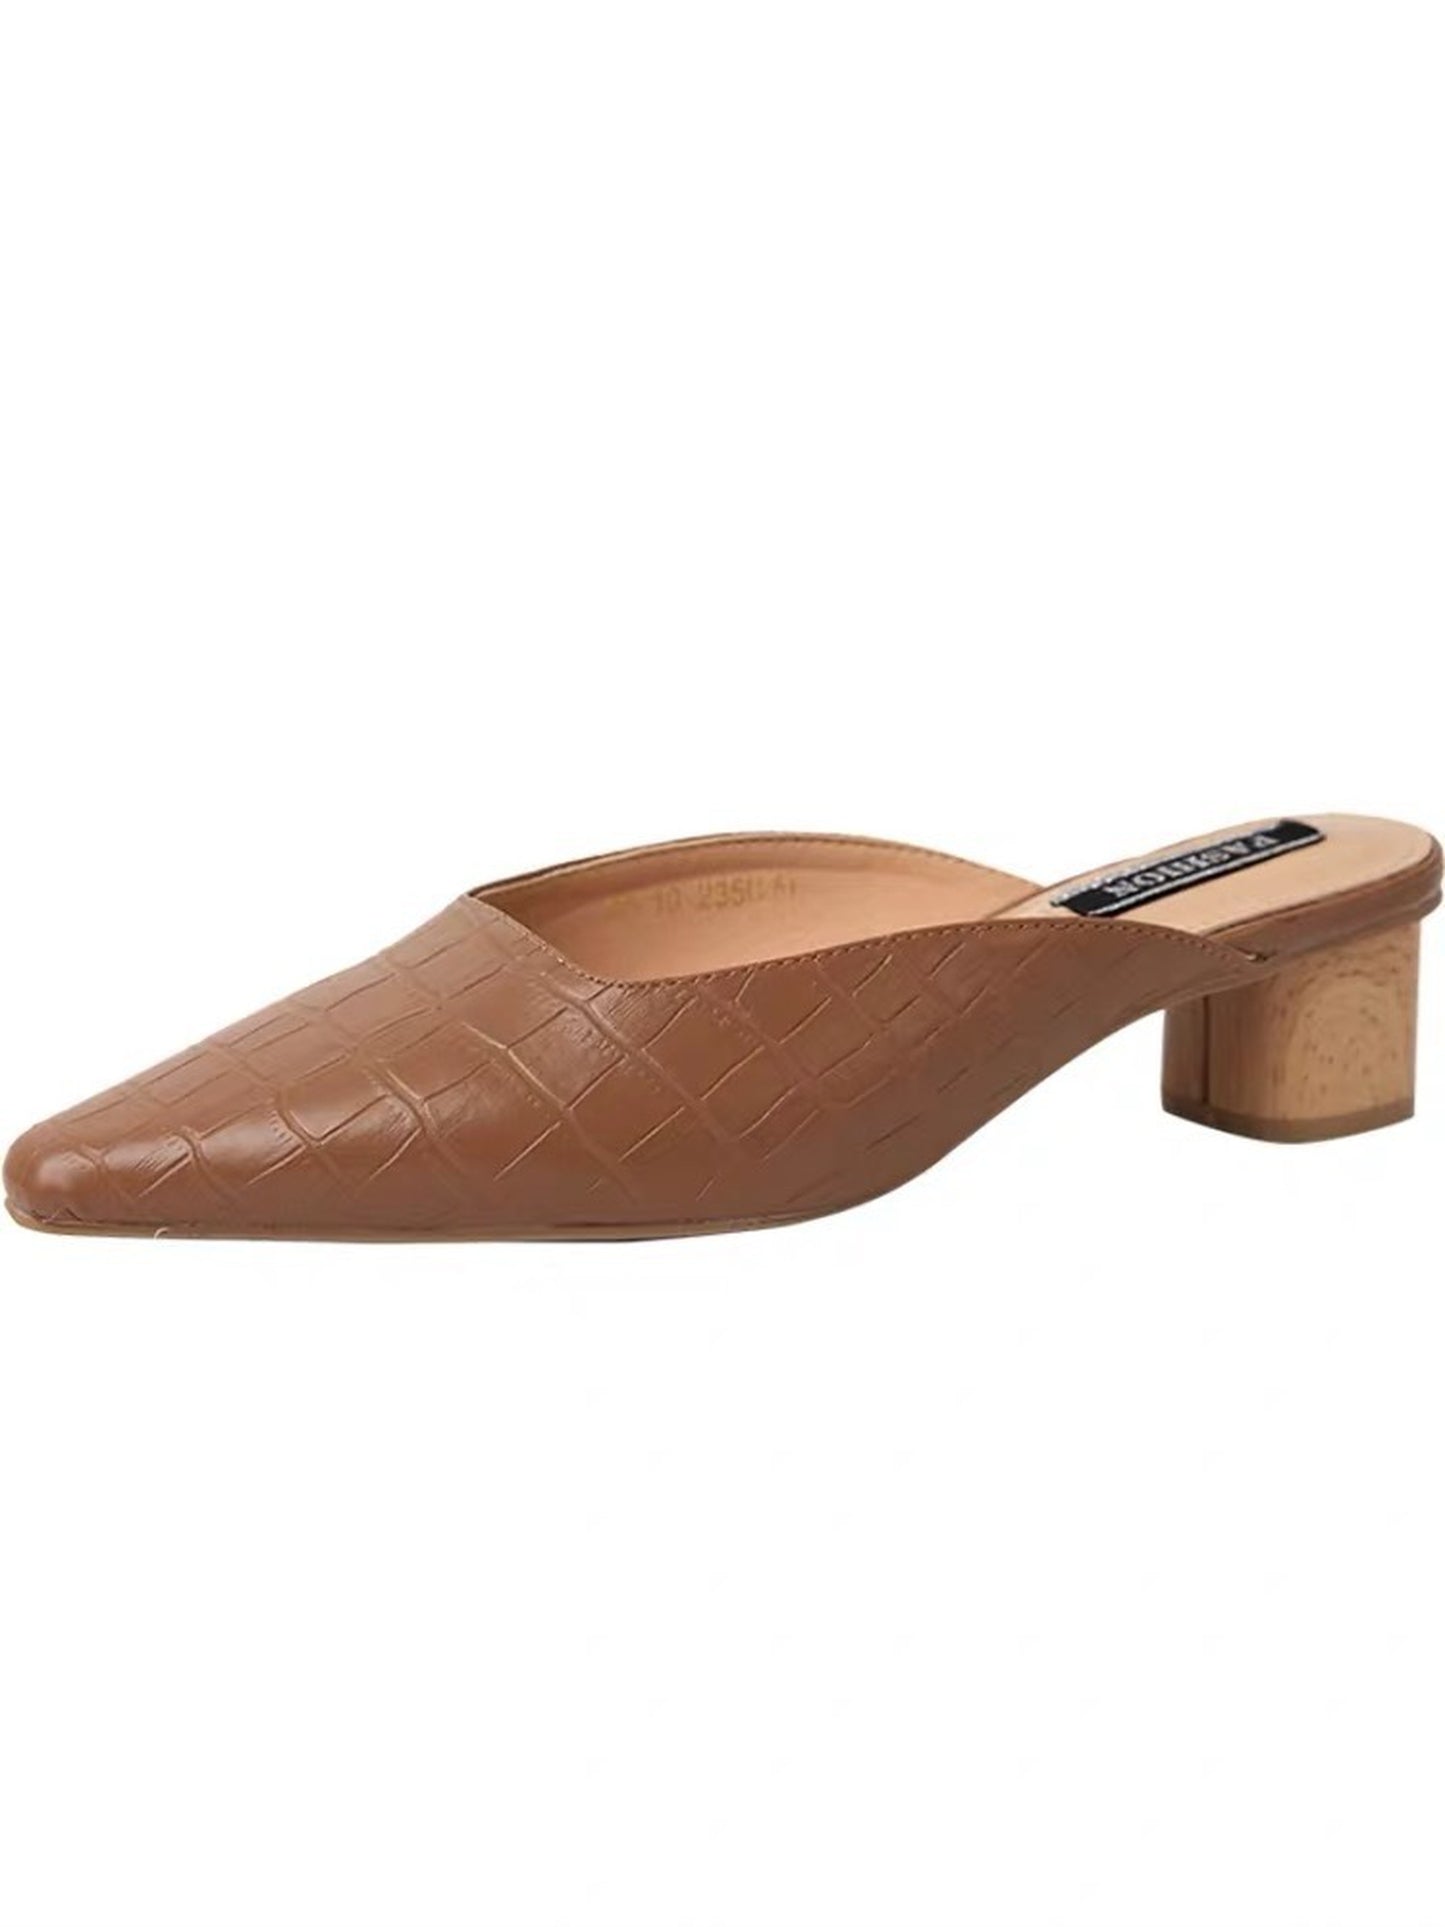 Croc sandals 5705